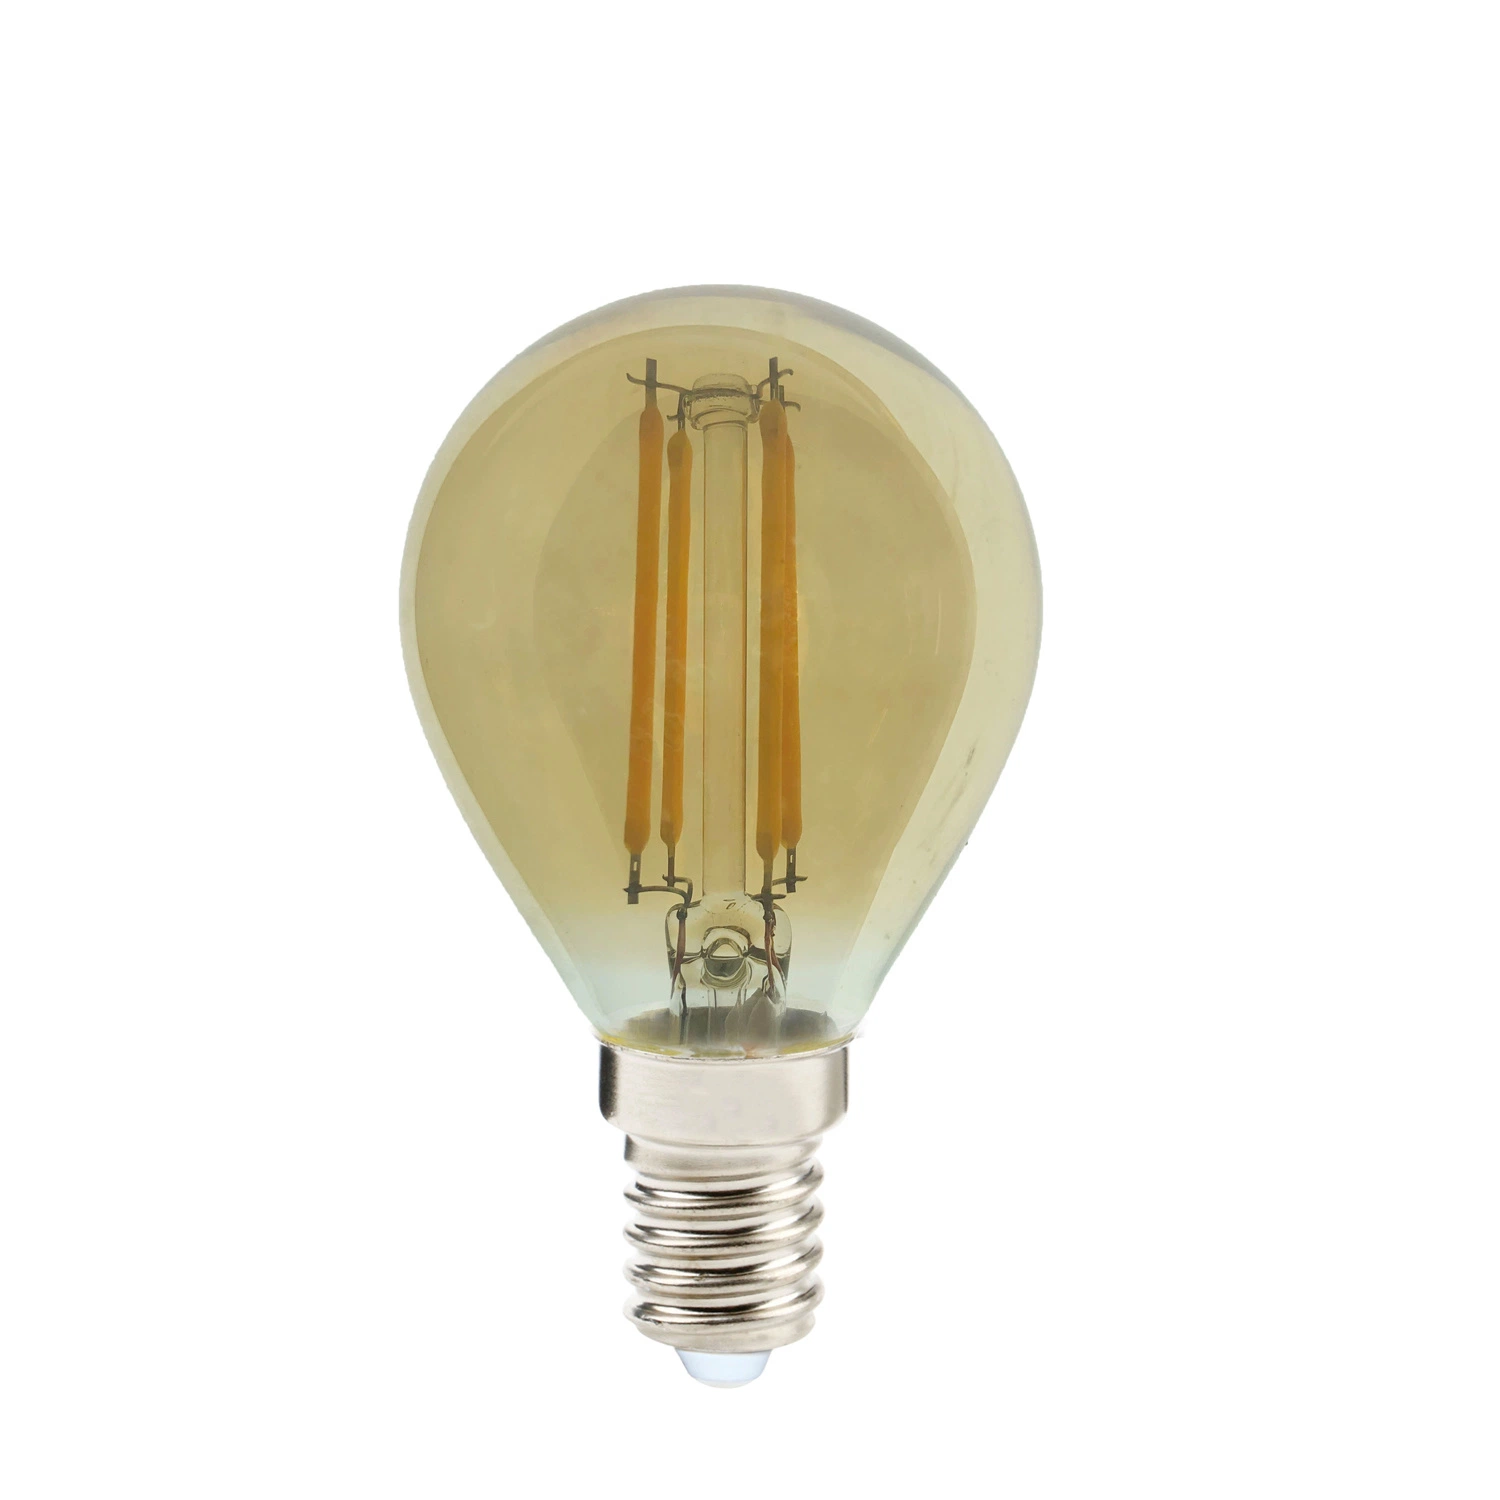 Filament Bulb G45 E27 220V 4W Delicate LED Lamp Bulb